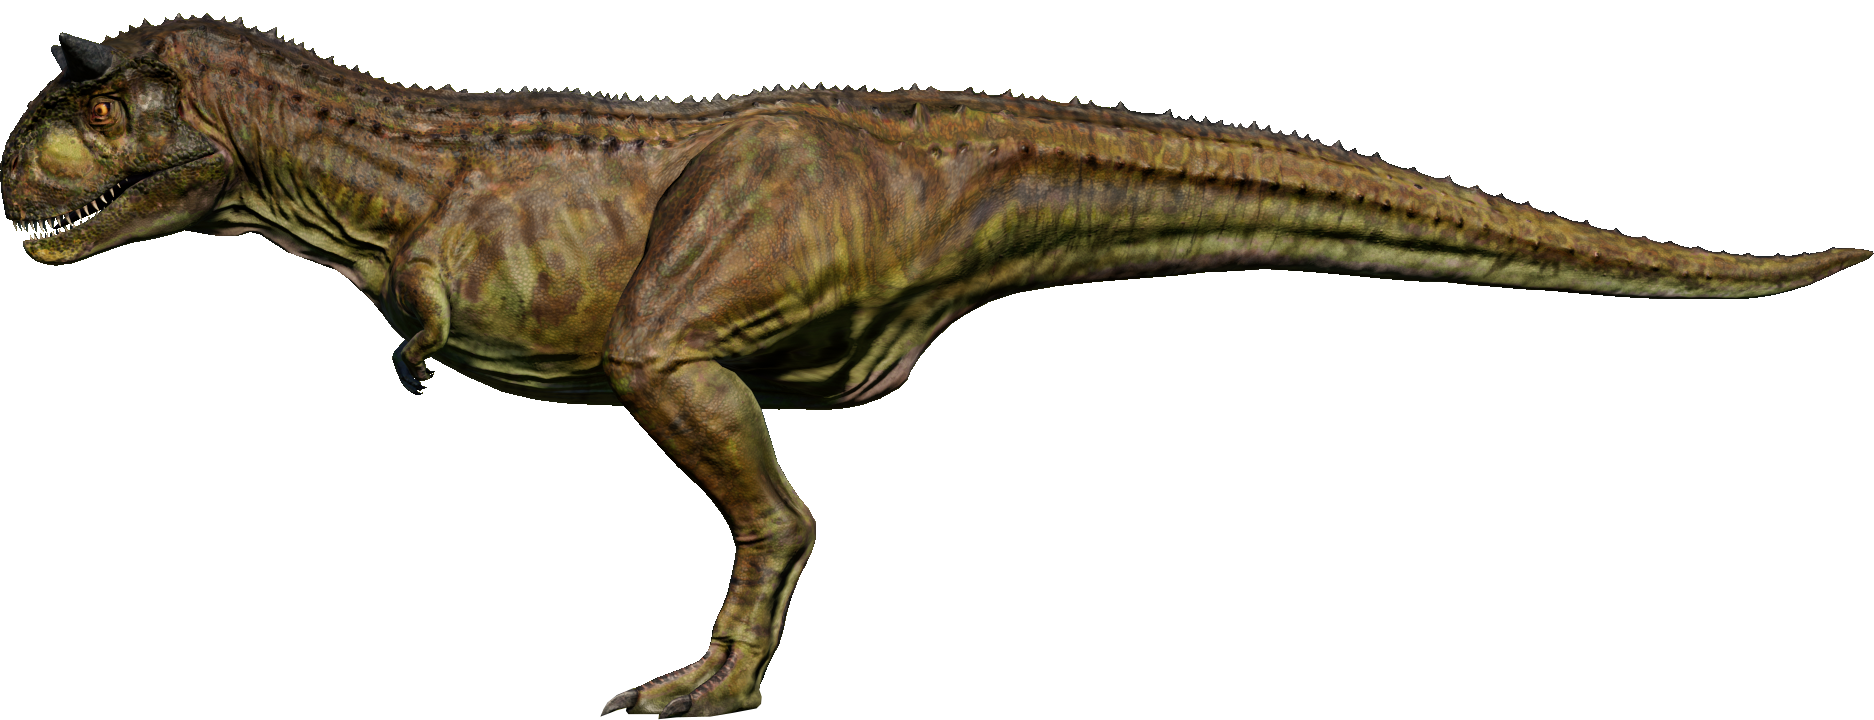 Carnotaurus Evolution 1997 - 2022  Jurassic Park, Jurassic World Dominion  